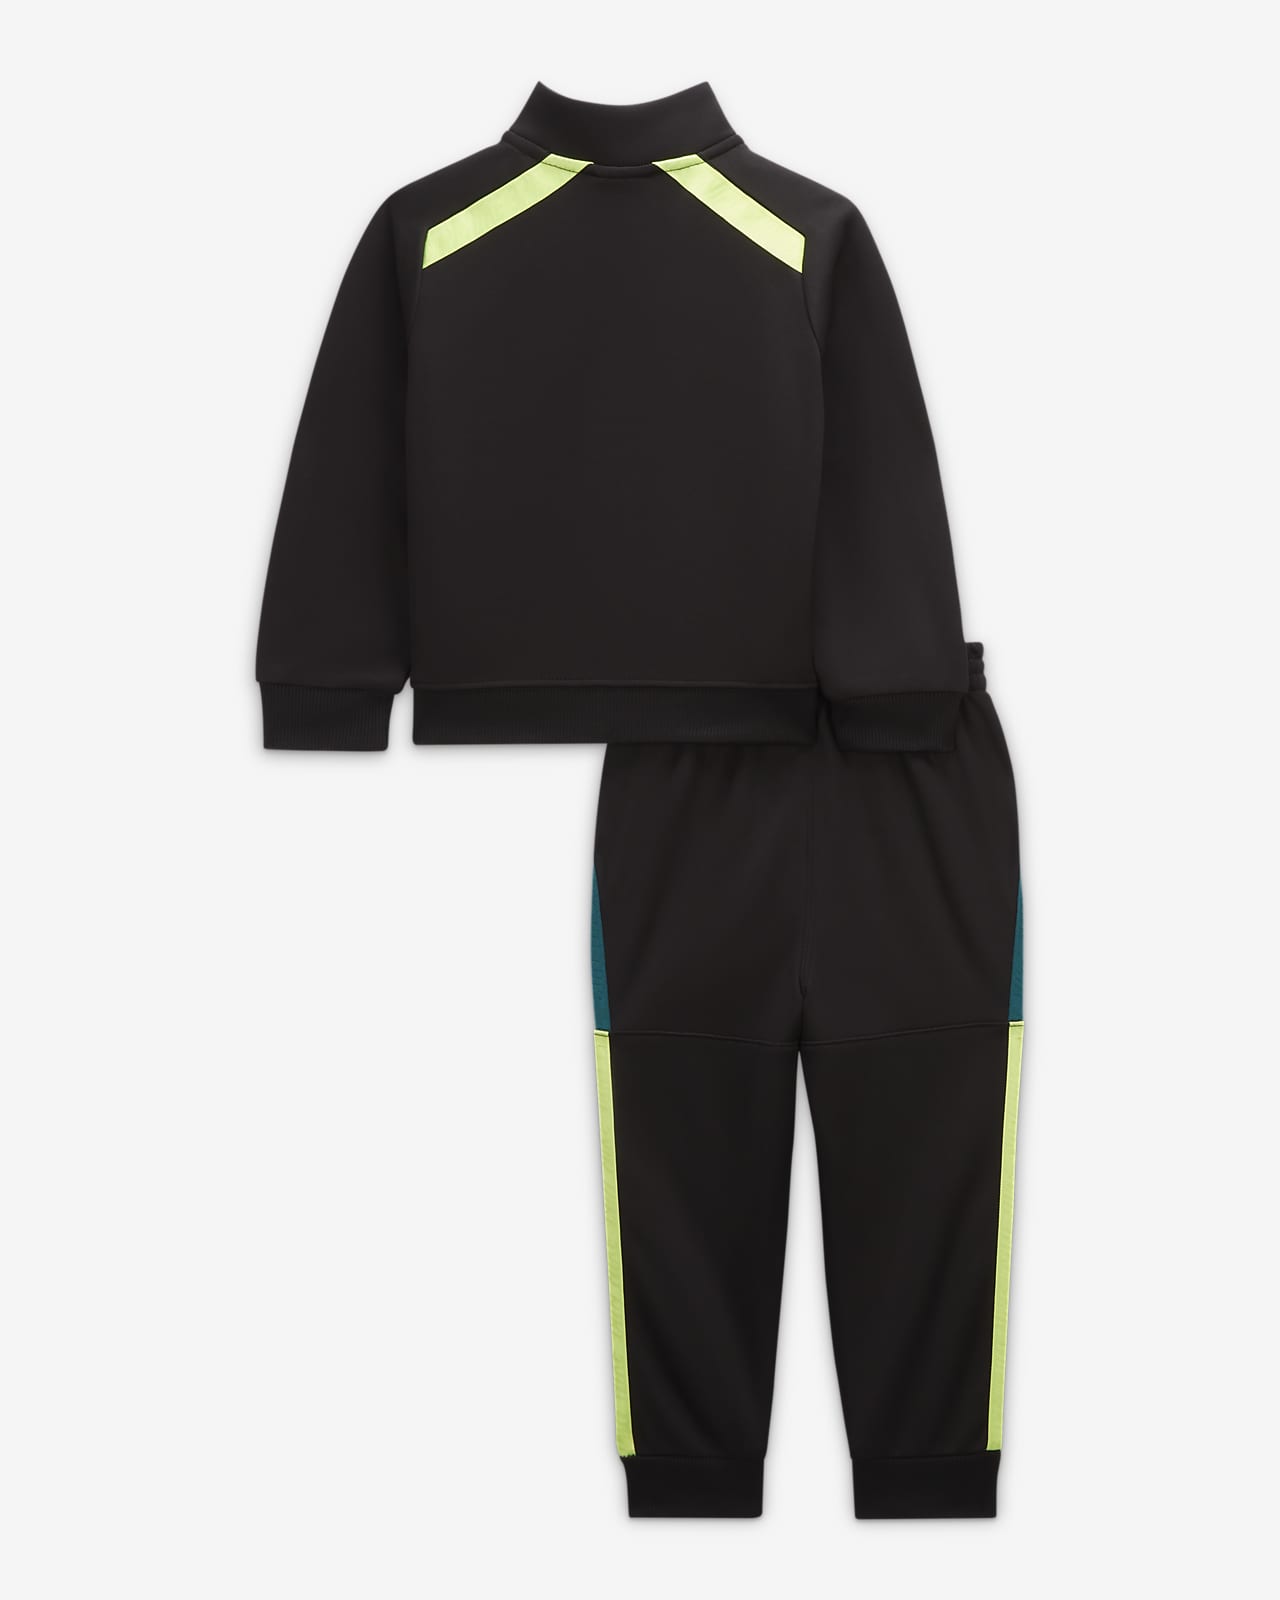 Nike Sportswear Full-Zip Taping Set Dri-FIT Tracksuit. Baby